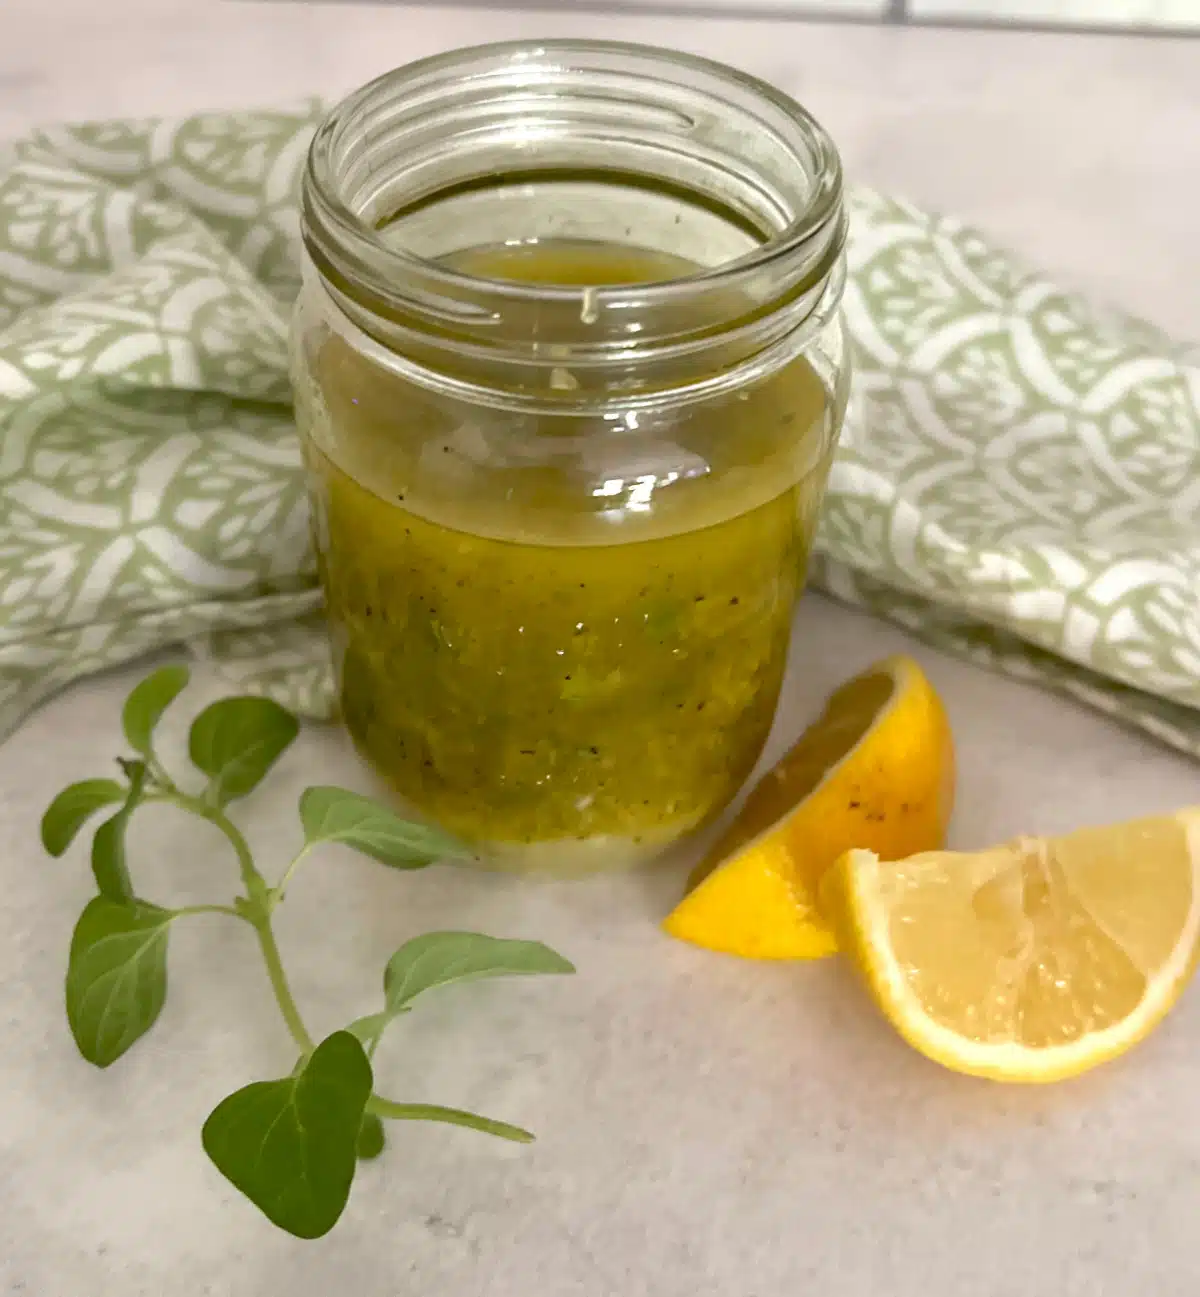 greek salad dressing in a jar with lemon wedges and fresh oregano